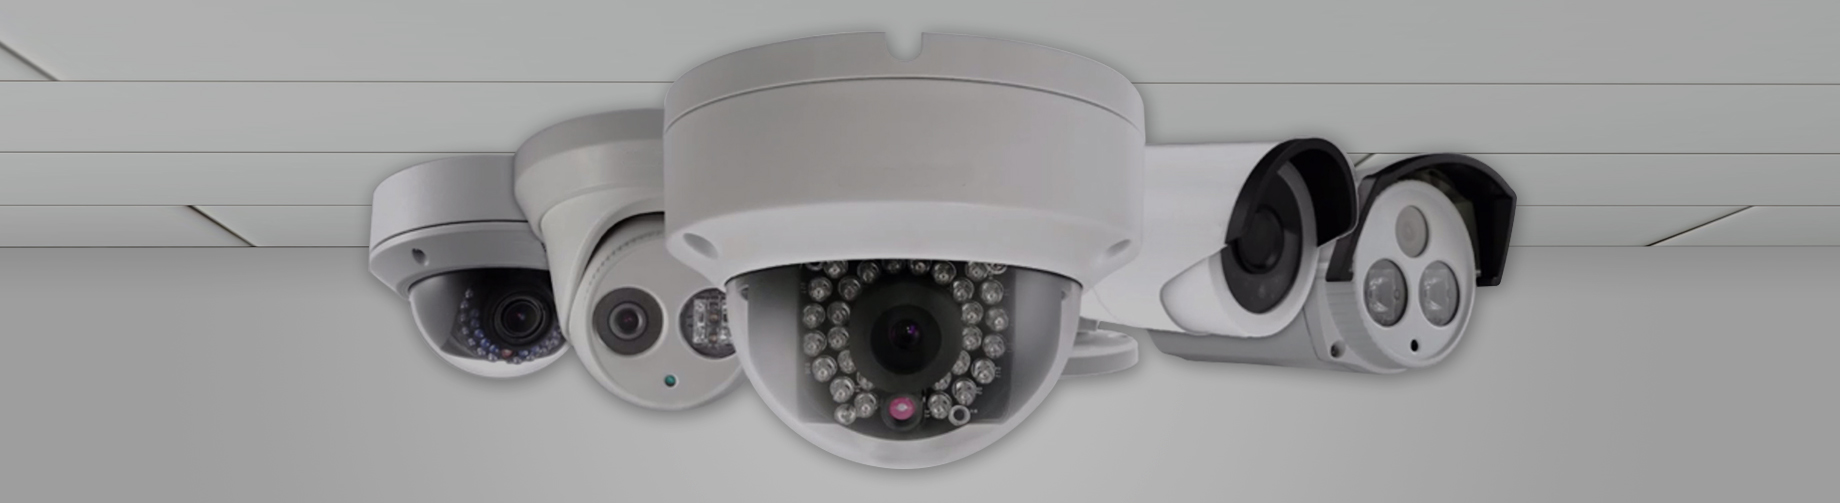 Security Camera Image